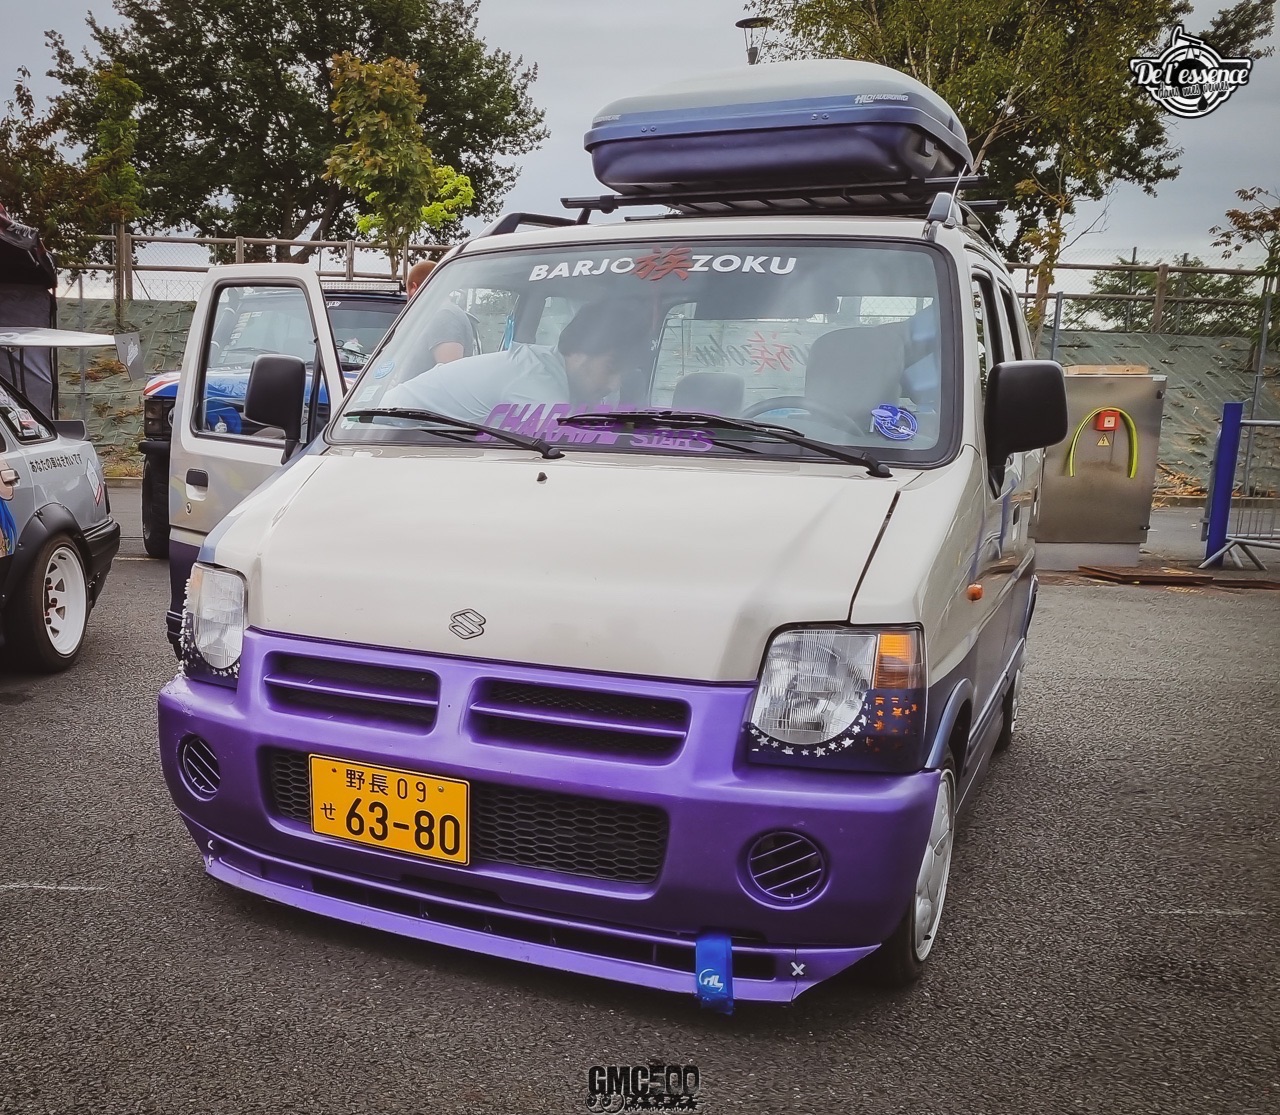 Suzuki Wagon R+... totalement Barjo ! 4